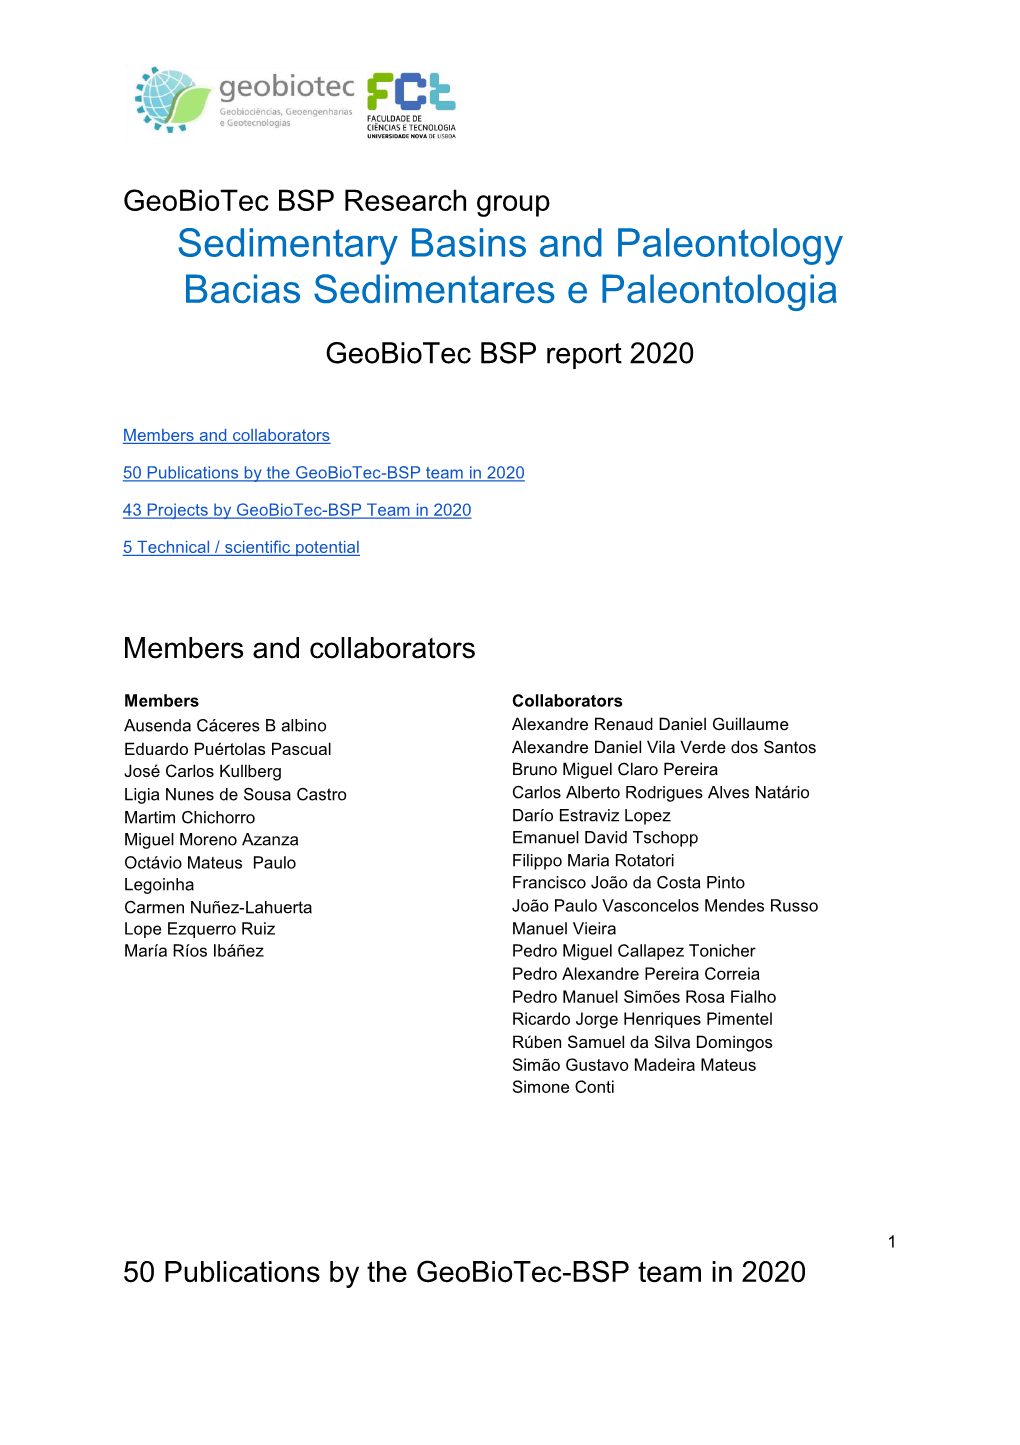 Sedimentary Basins and Paleontology Bacias Sedimentares E Paleontologia